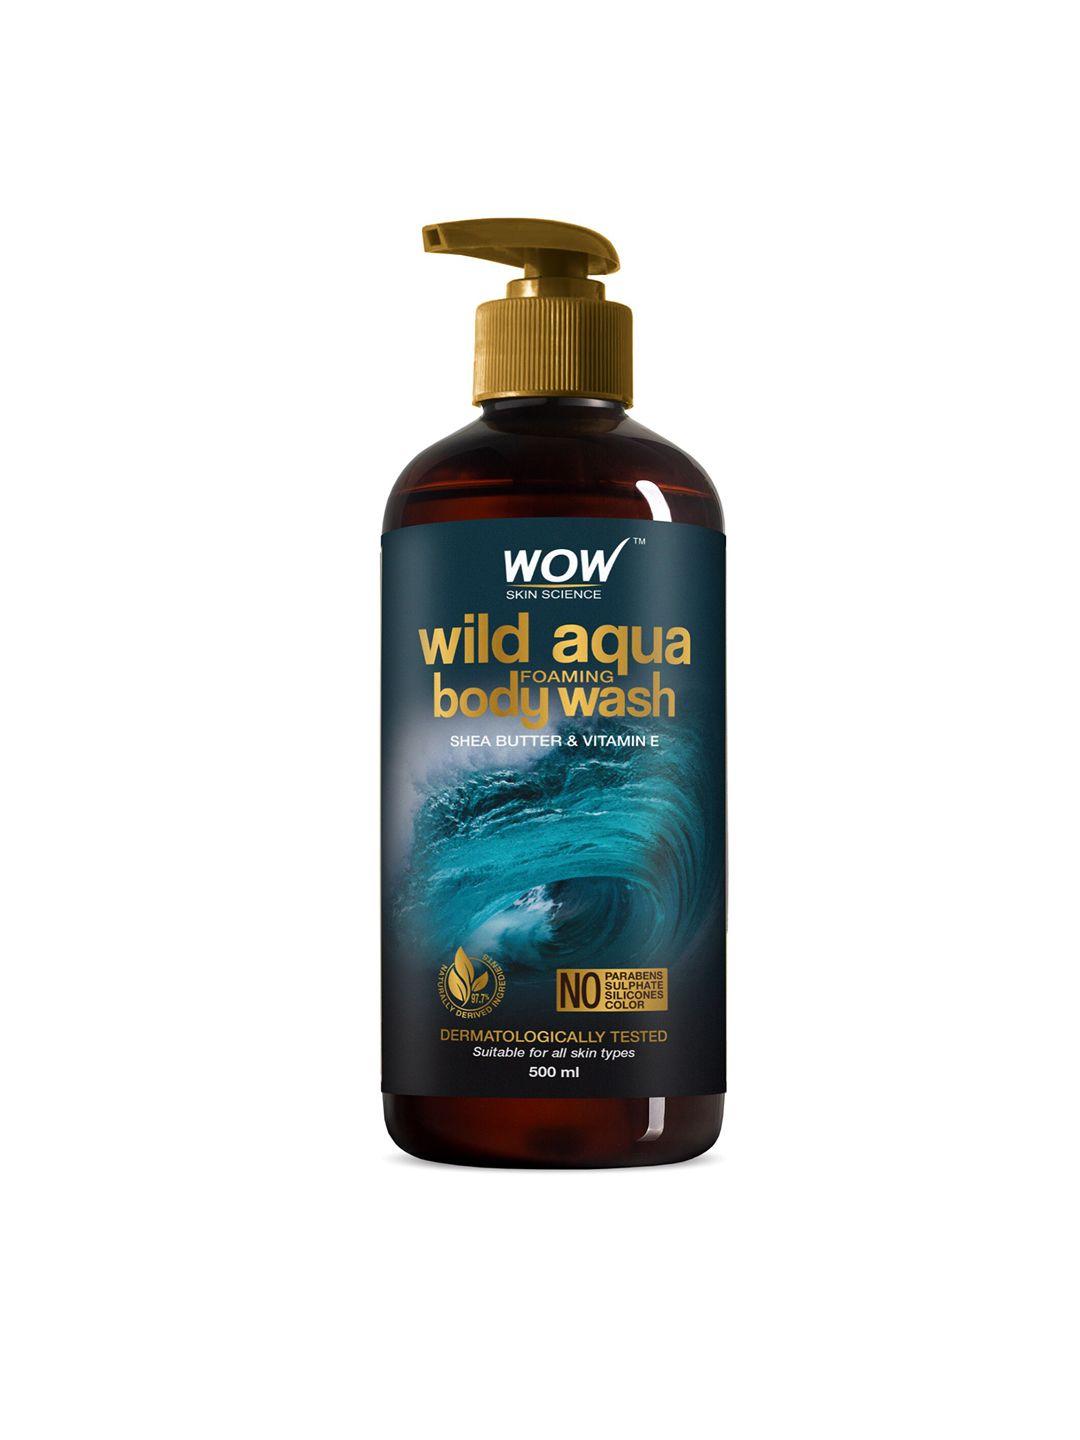 wow skin science wild aqua foaming body wash with shea butter & vitamin e - 500 ml